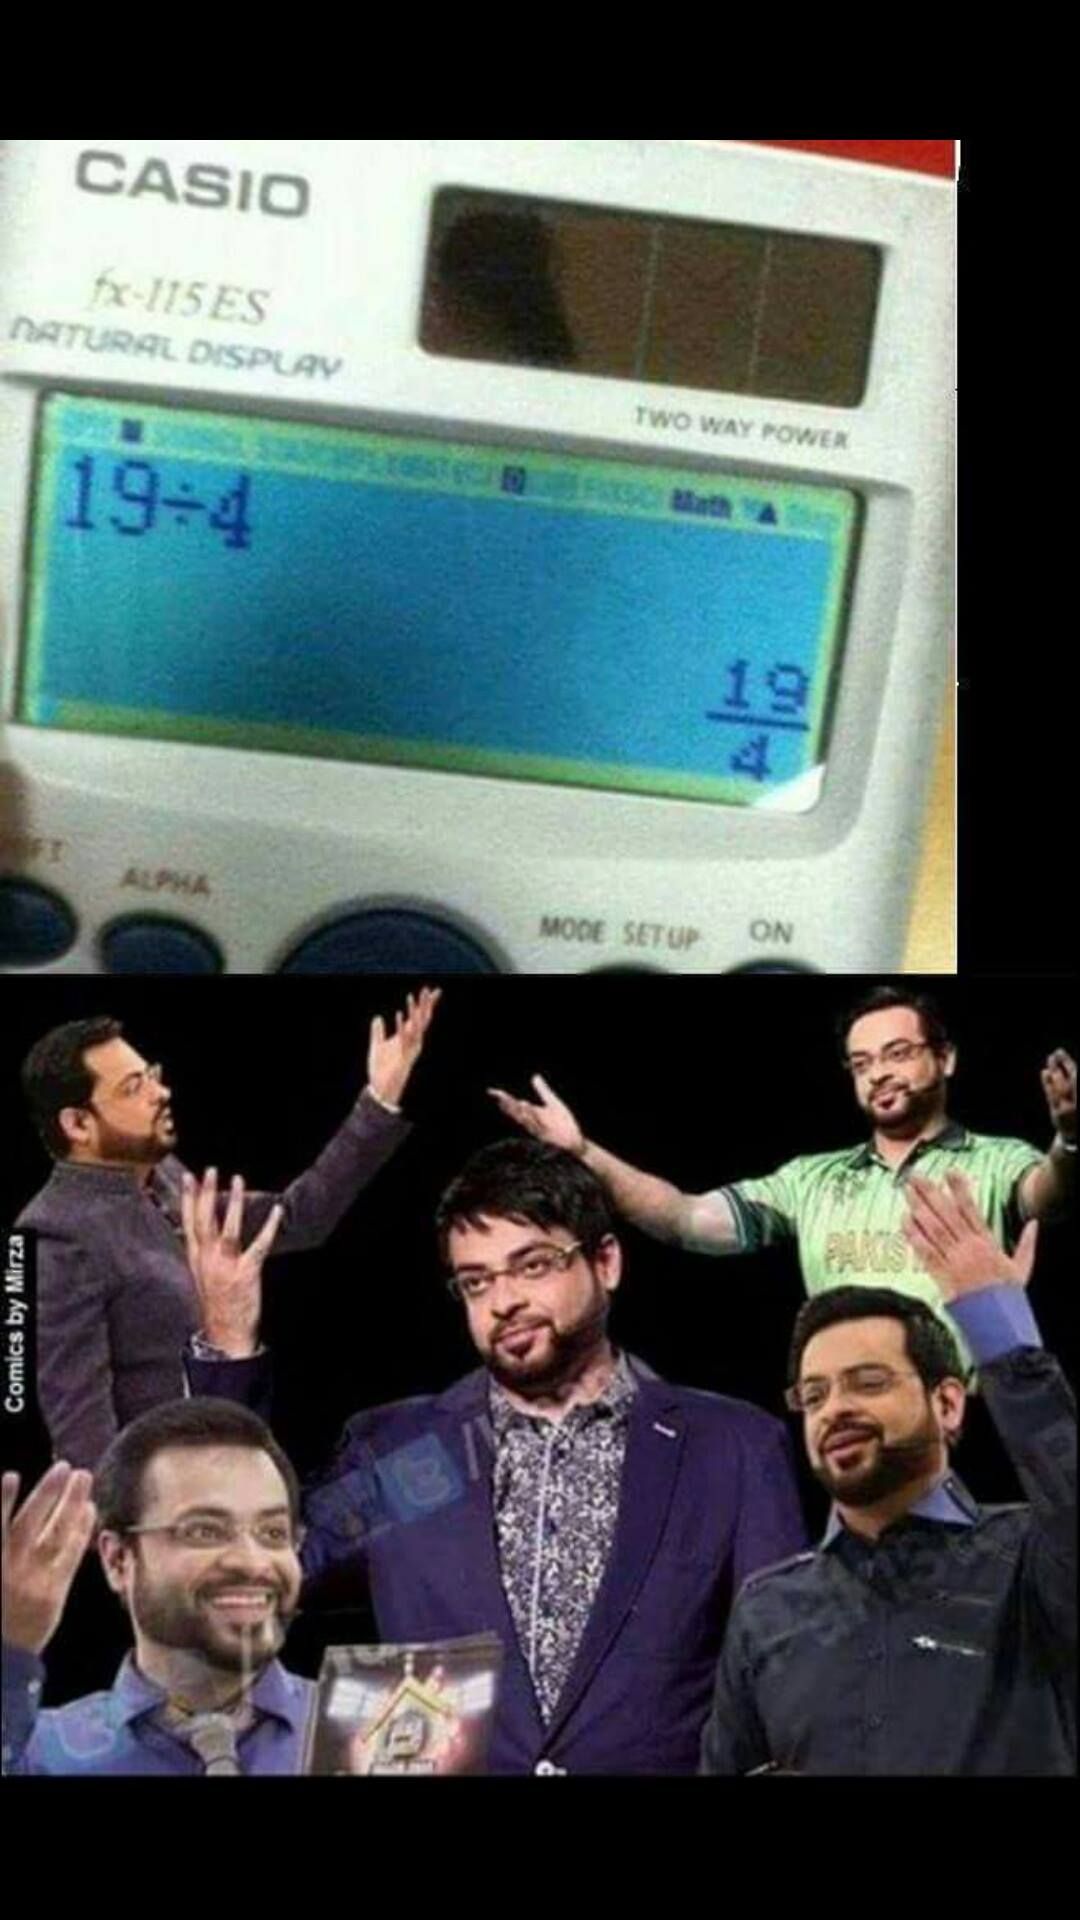 Thank you Calculator